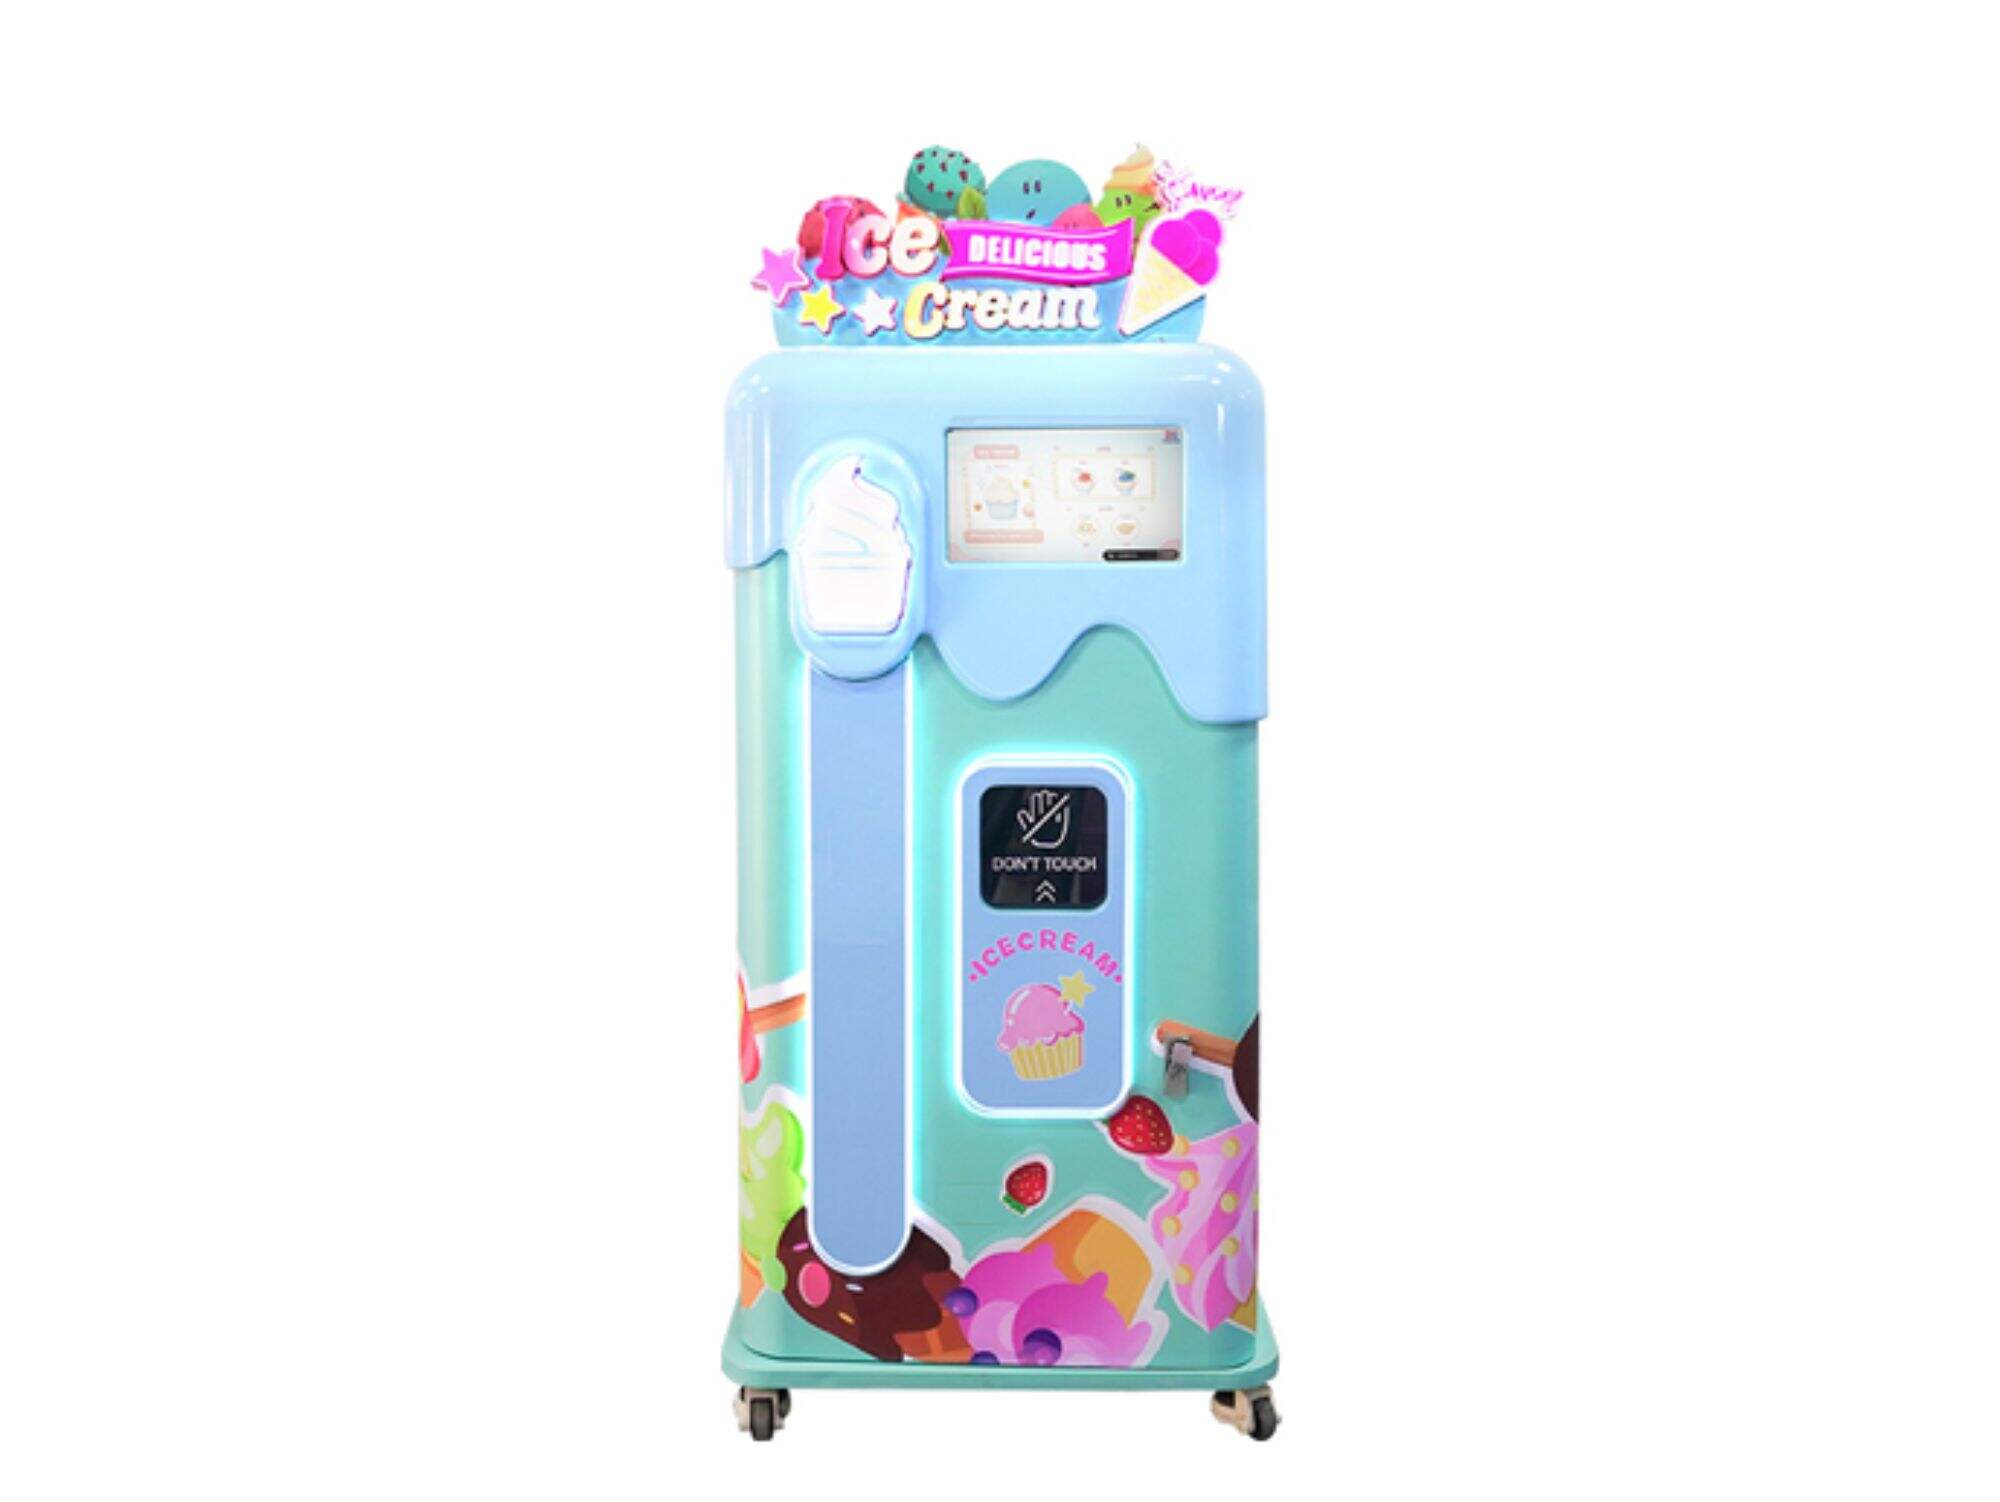 Soft Ice Cream Vending Machine